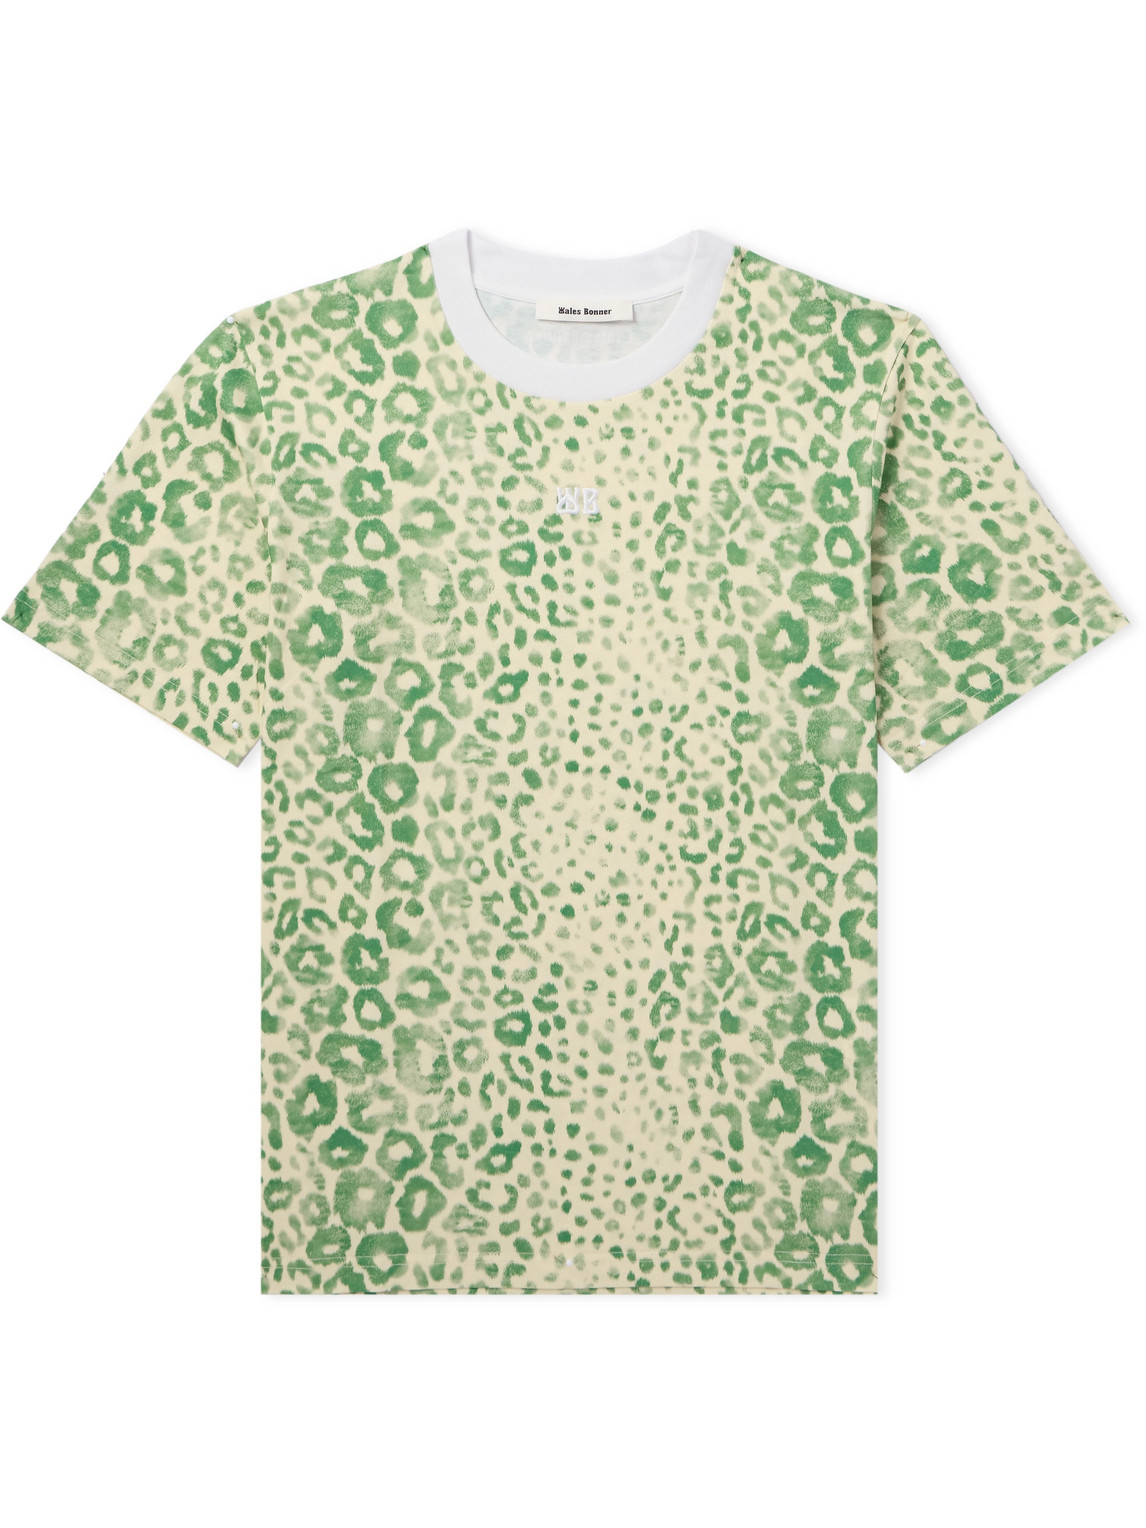 Wales Bonner - Original Logo-Embroidered Leopard-Print Organic Cotton-Jersey T-Shirt - Men - Green - S von Wales Bonner